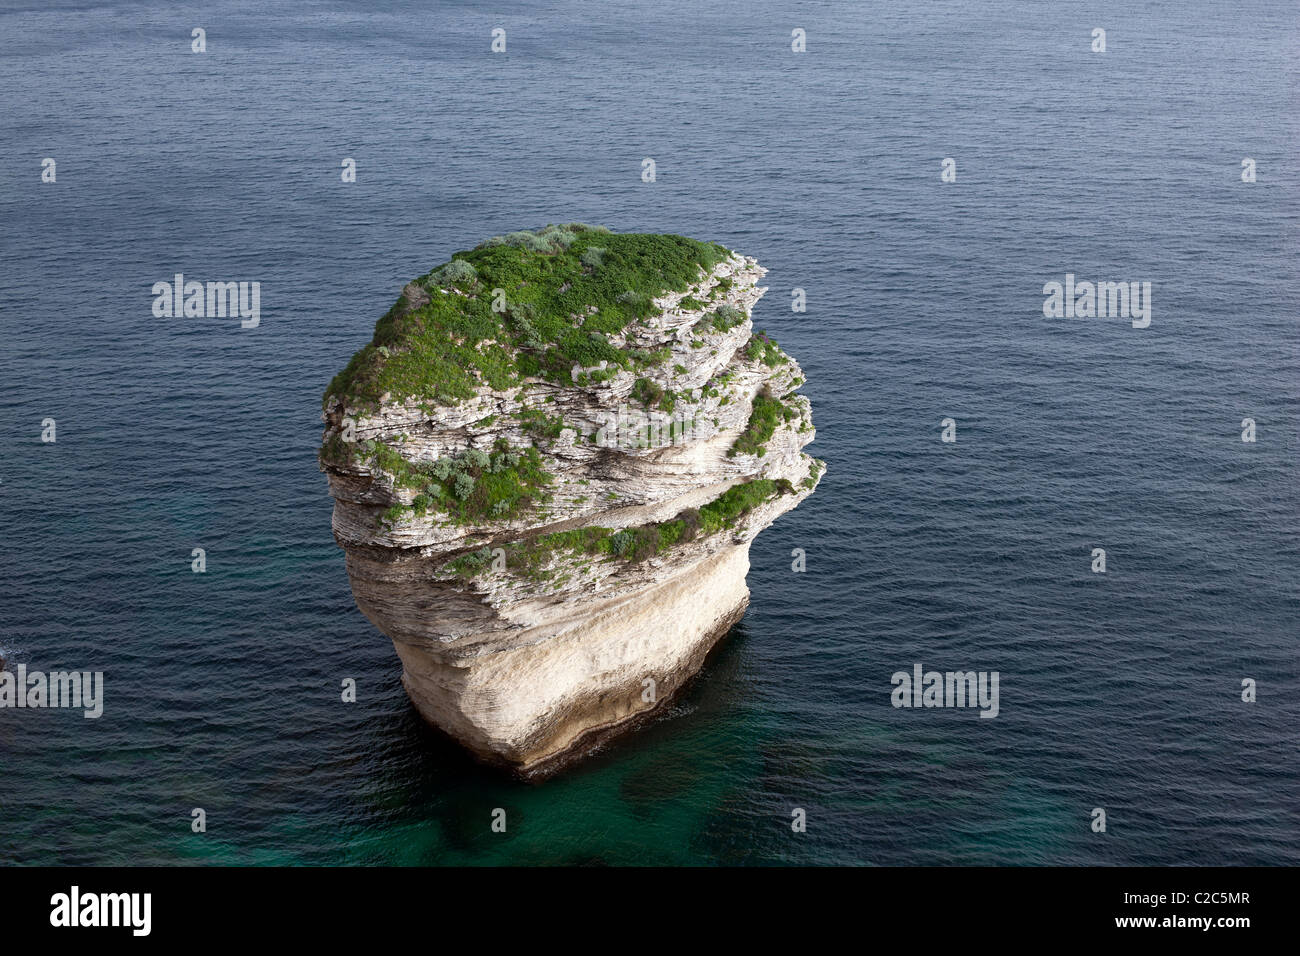 Formation de roches calcaires.Grain de sable, Bonifacio, Corse, France. Banque D'Images